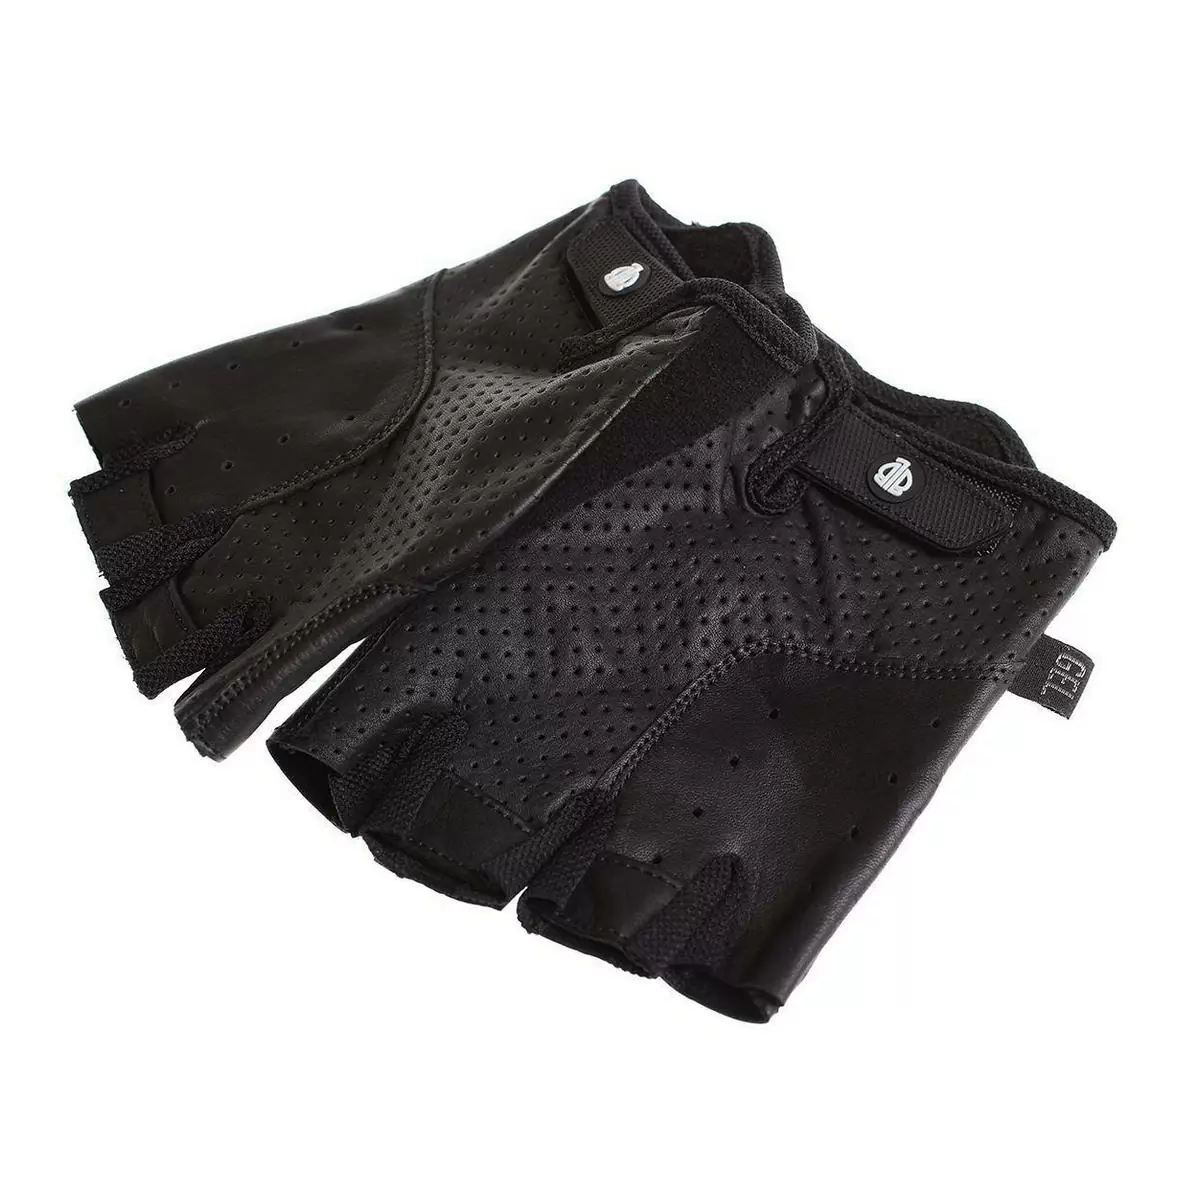 leather gloves classic sport size xxl black #1